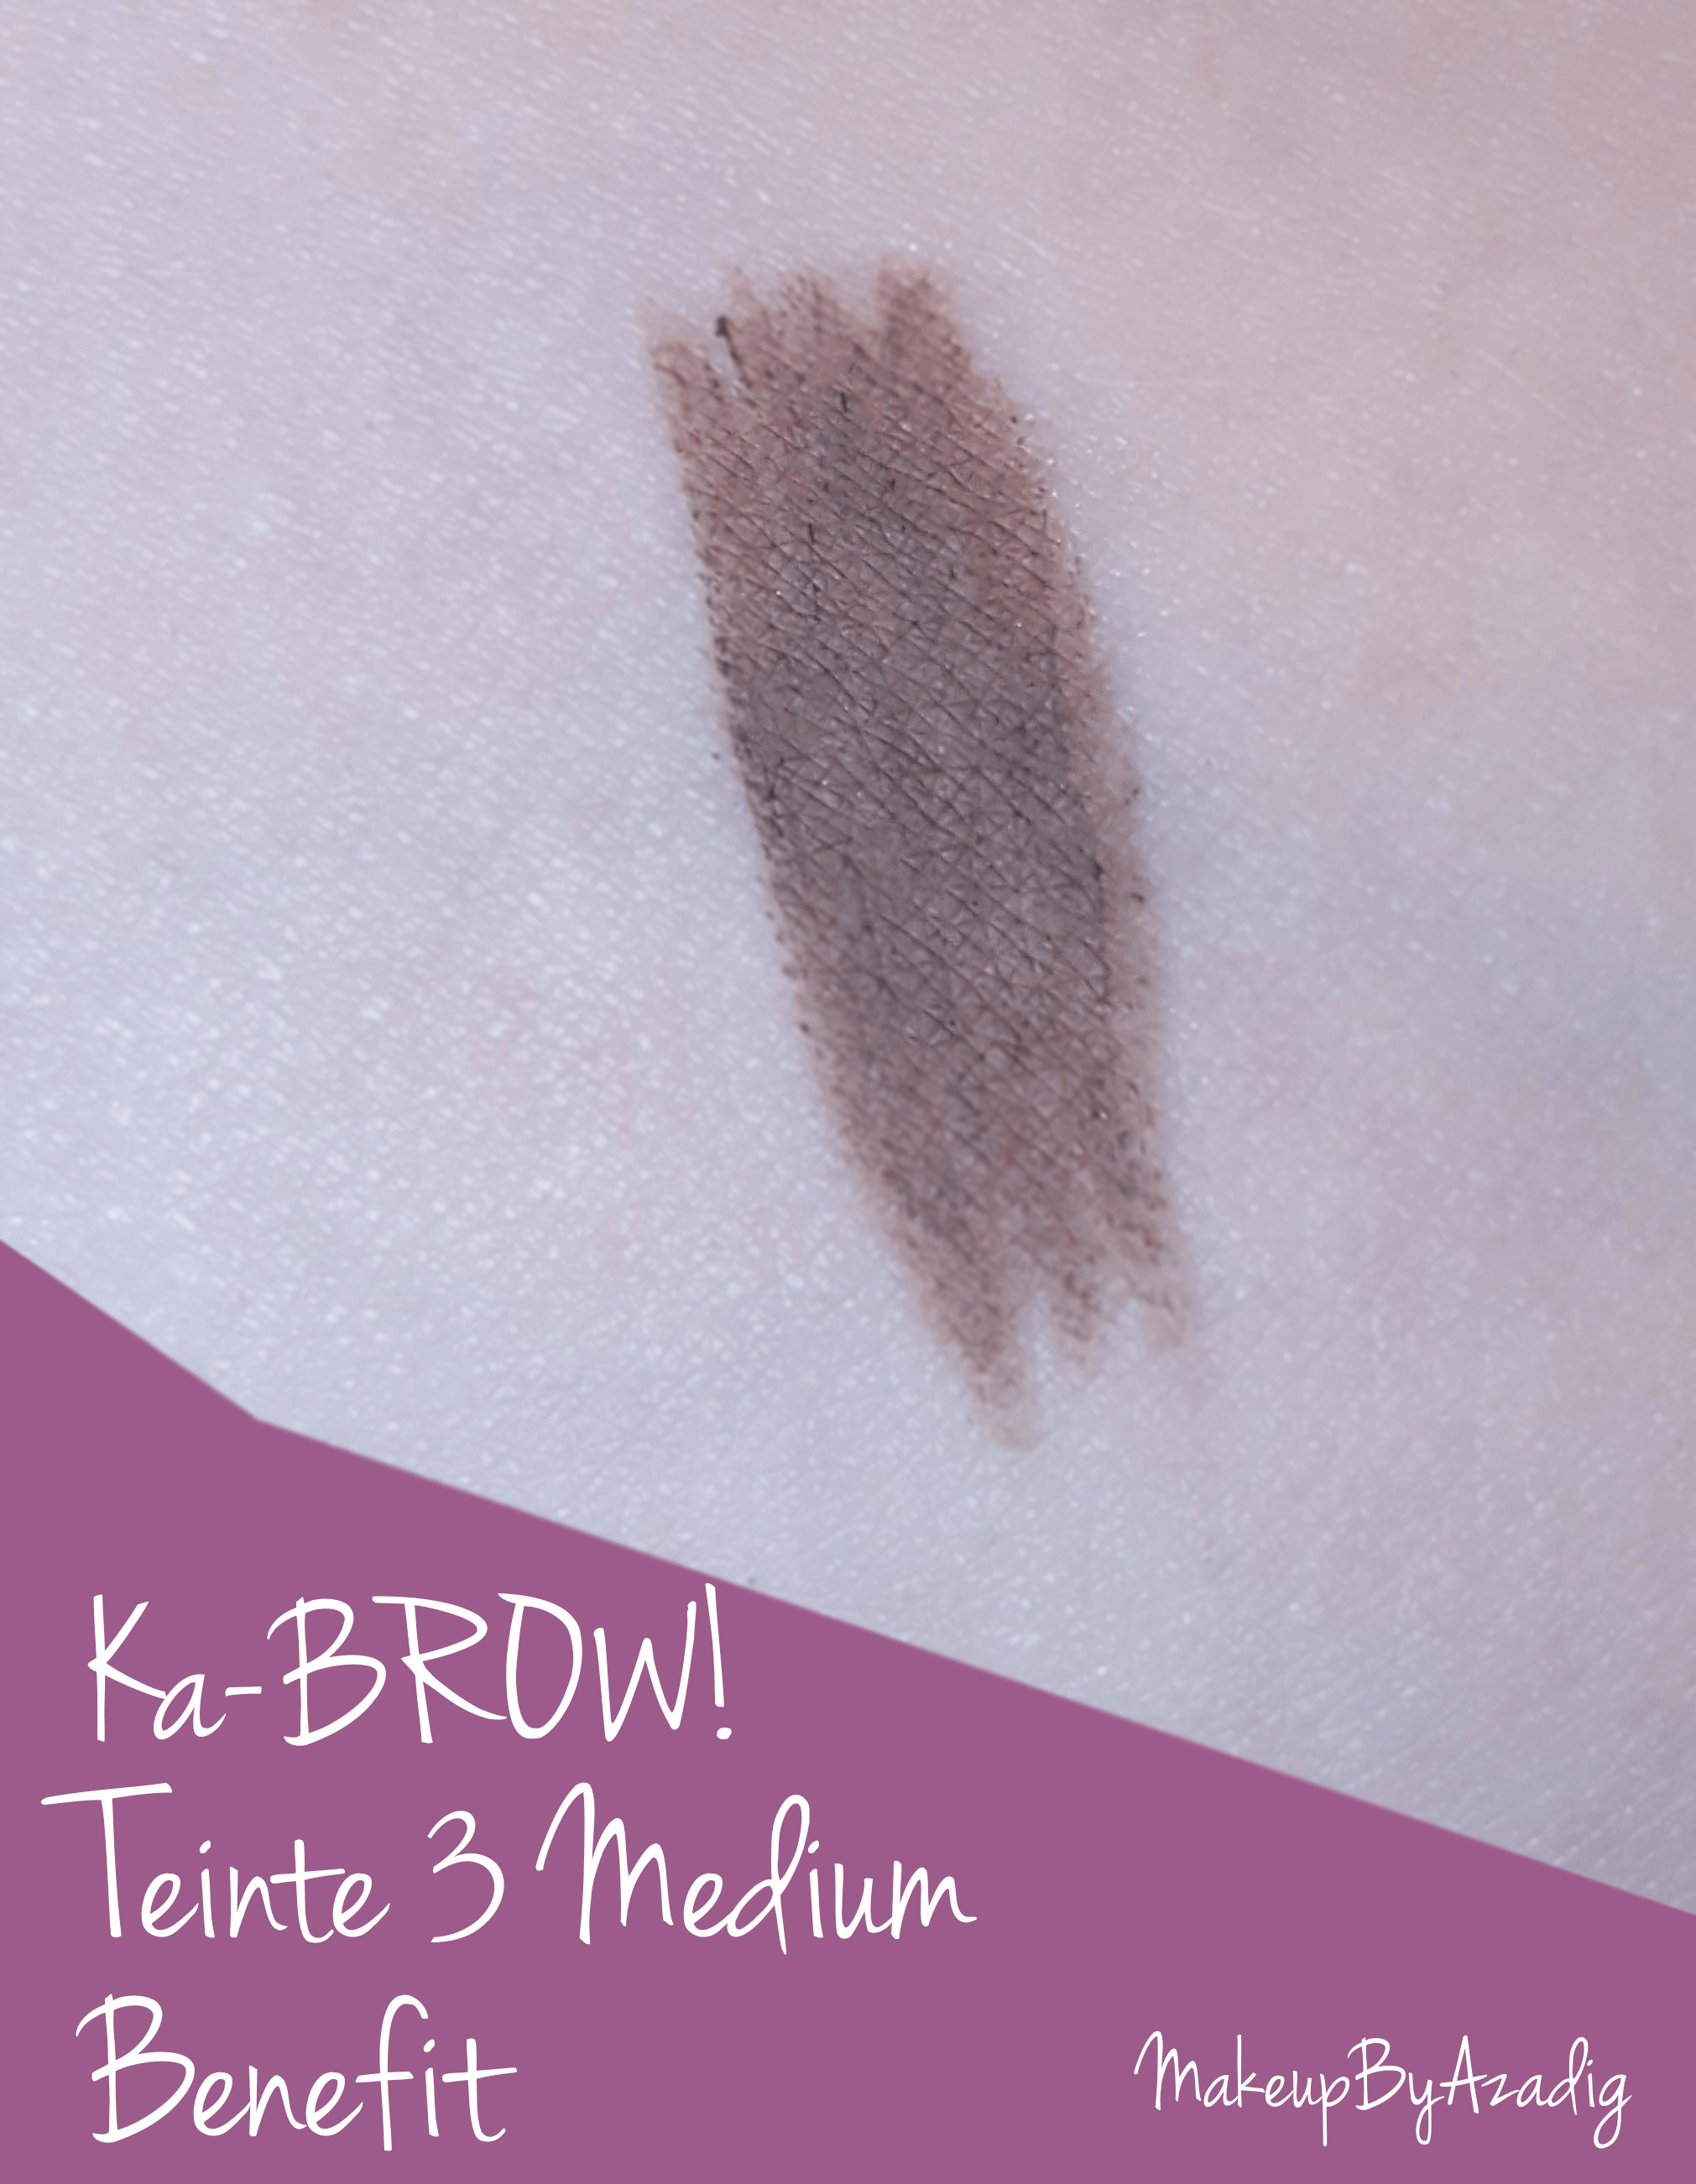 ka-brow-gel-creme-coloration-sourcils-benefit-makeupbyazadig-paris-blog-revue-avis-prix-enjoyphoenix-swatch